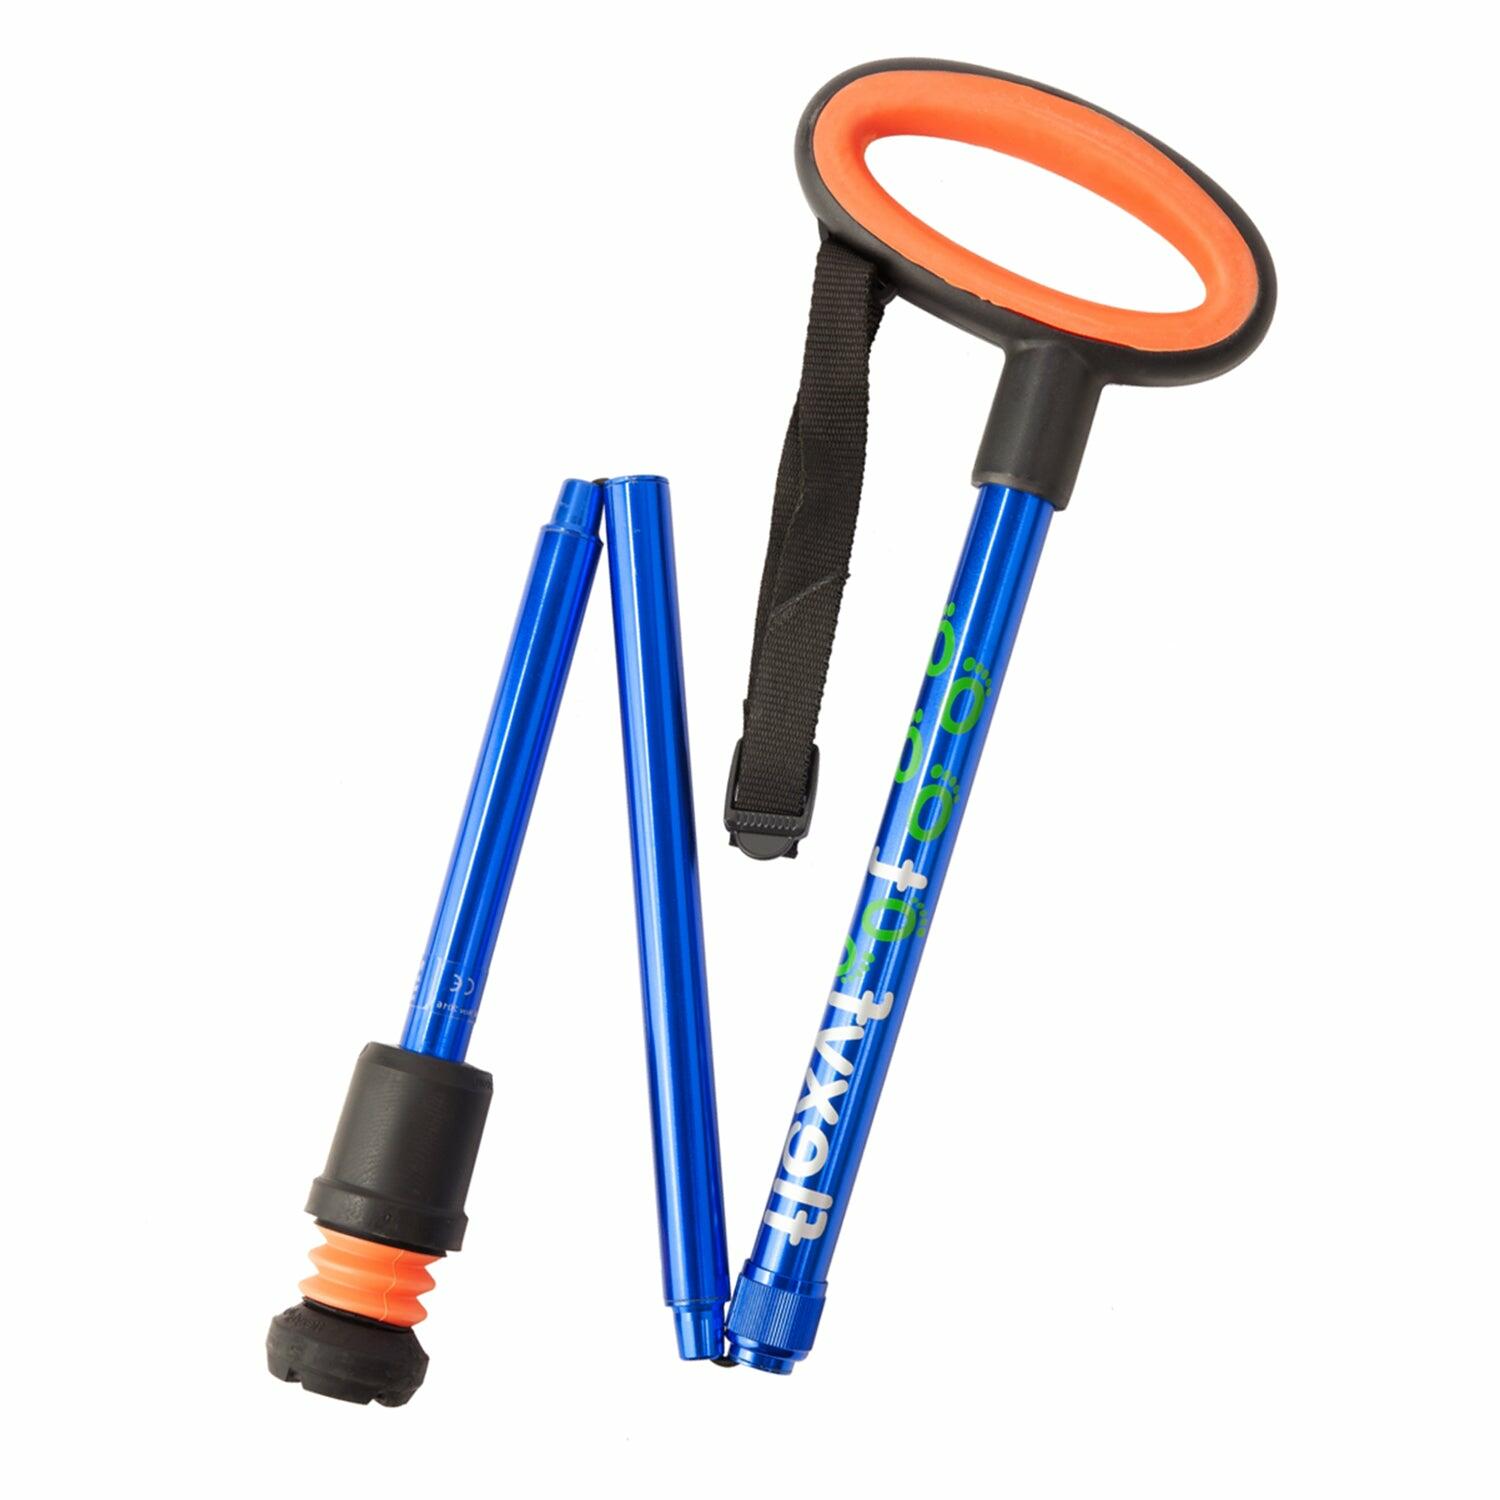 A blue Flexyfoot Premium Oval Handle Folding Walking Stick